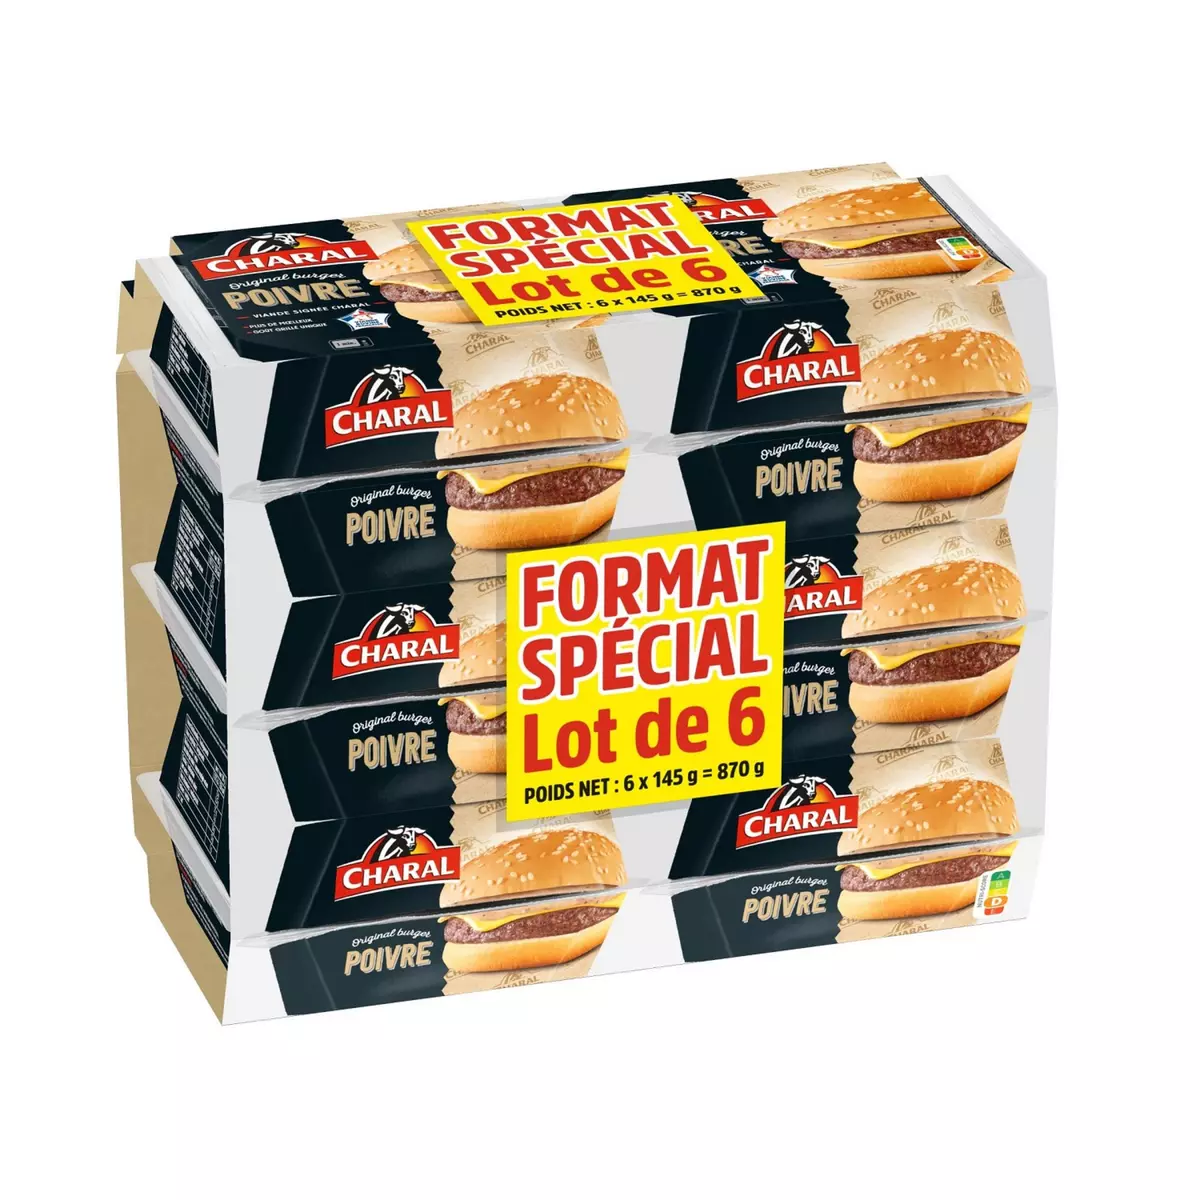 CHARAL Original Burger poivre 6x145g